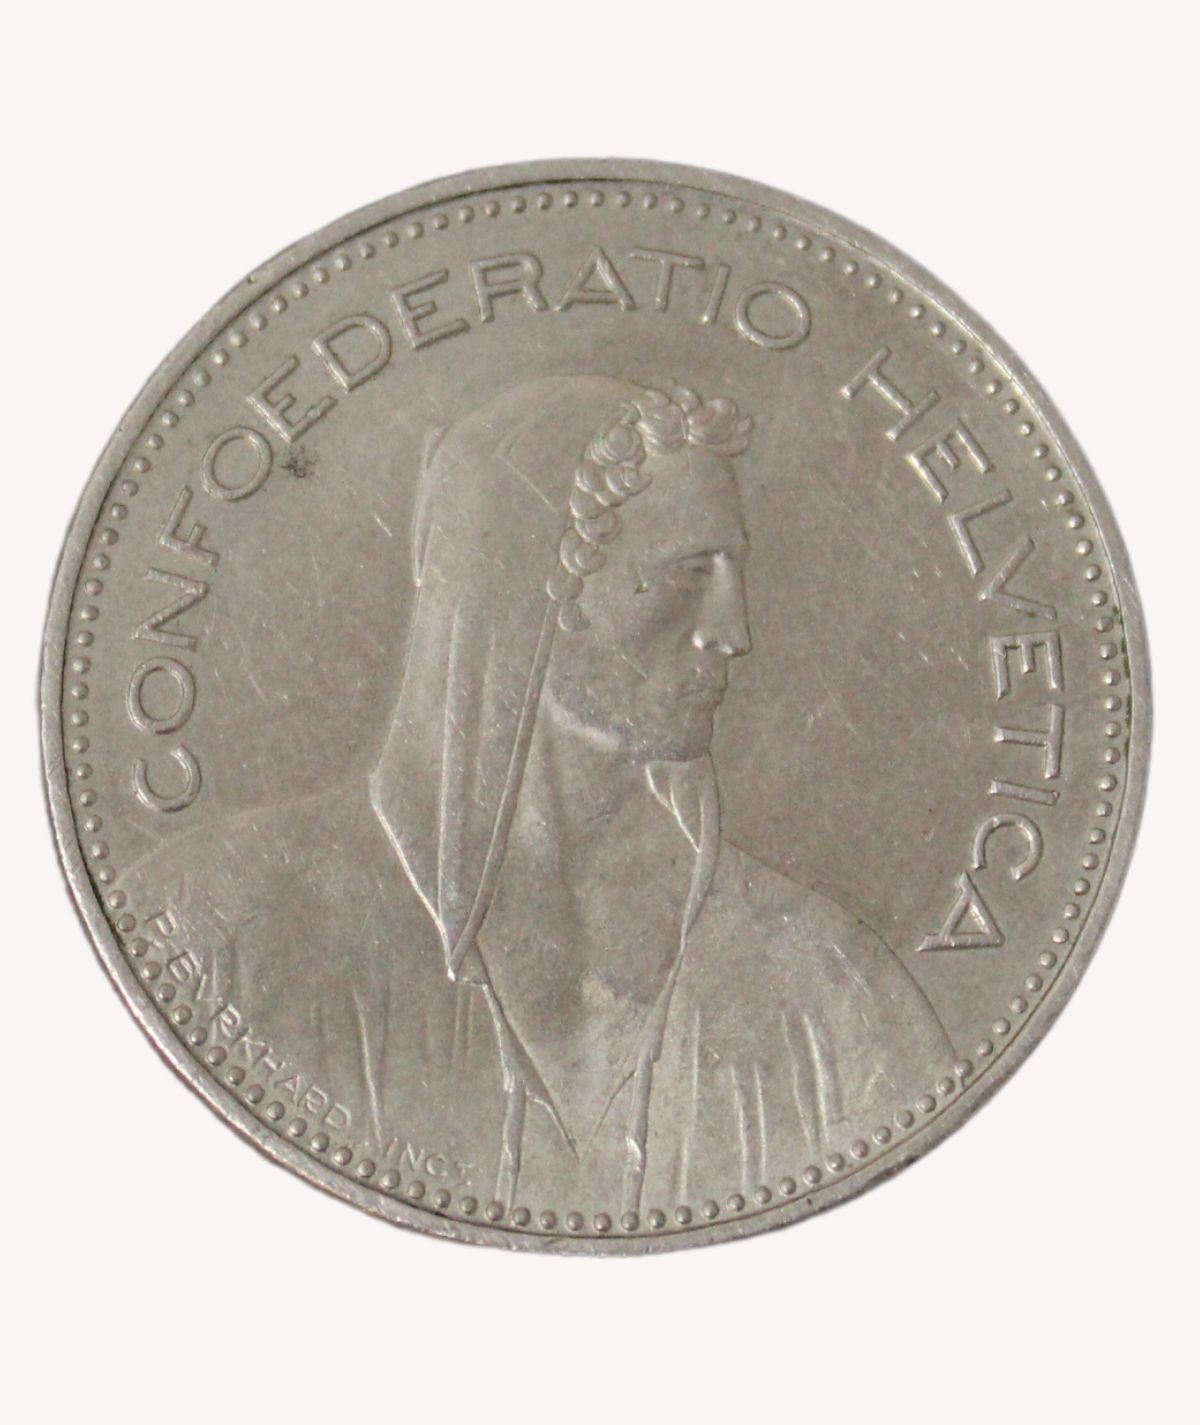 Moneda 5 Francos 1998 Suiza/ GoldenArt